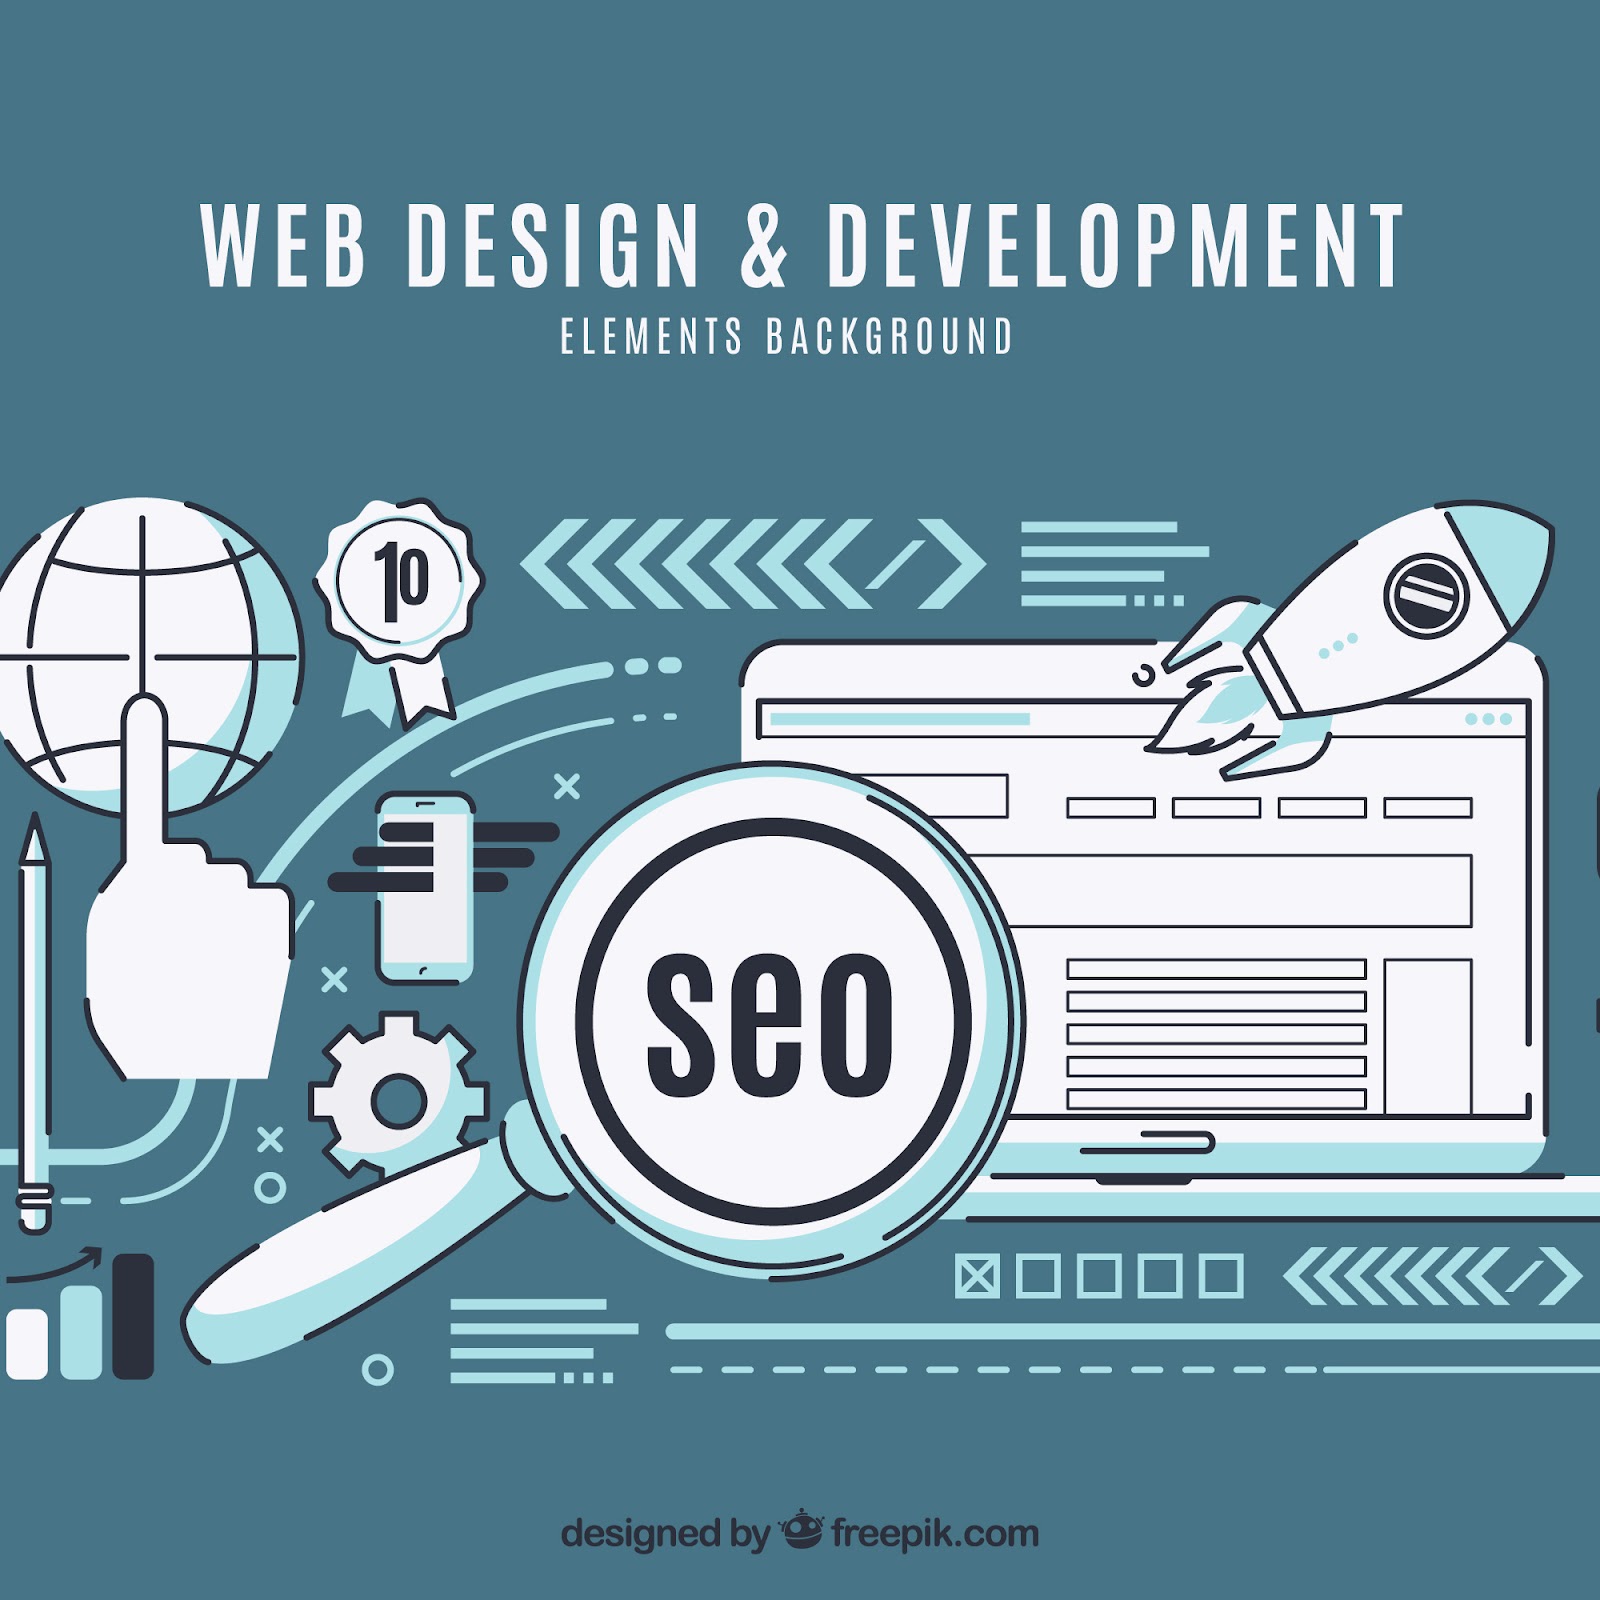 An illustrative design of different web design and development elements